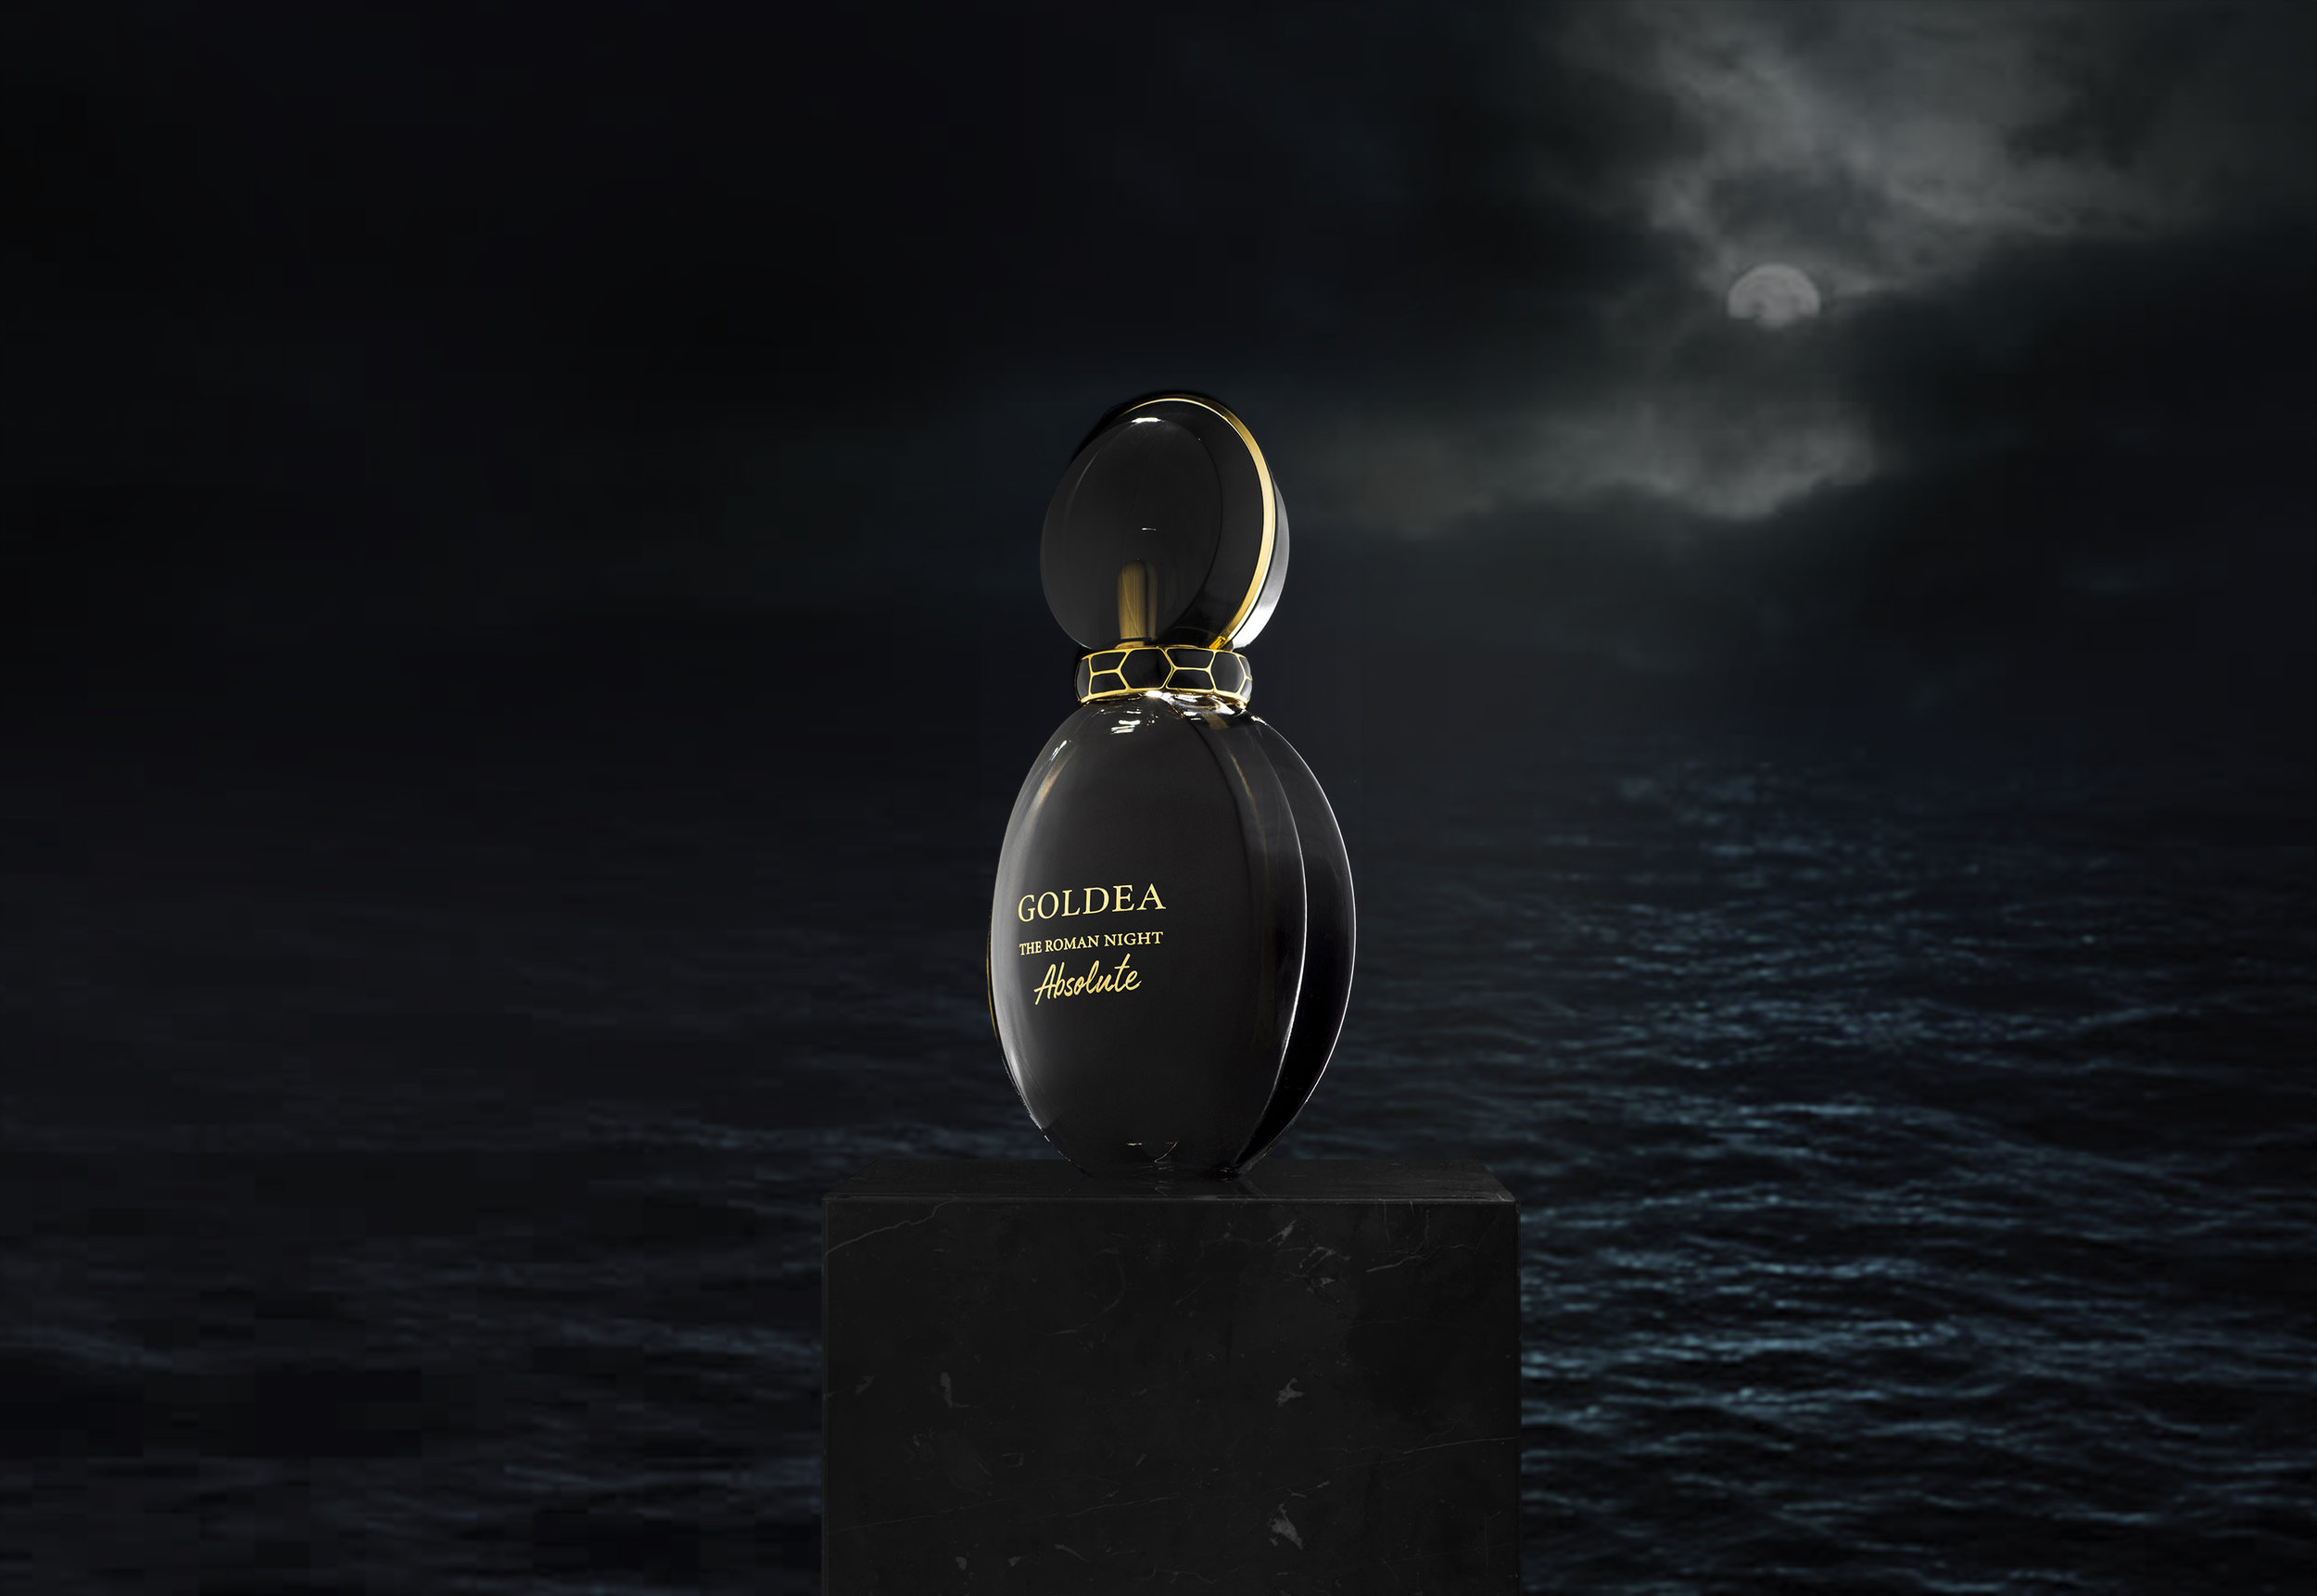 BVLGARI Goldea The Roman Night Perfume - photo by Andrew Werner.jpg